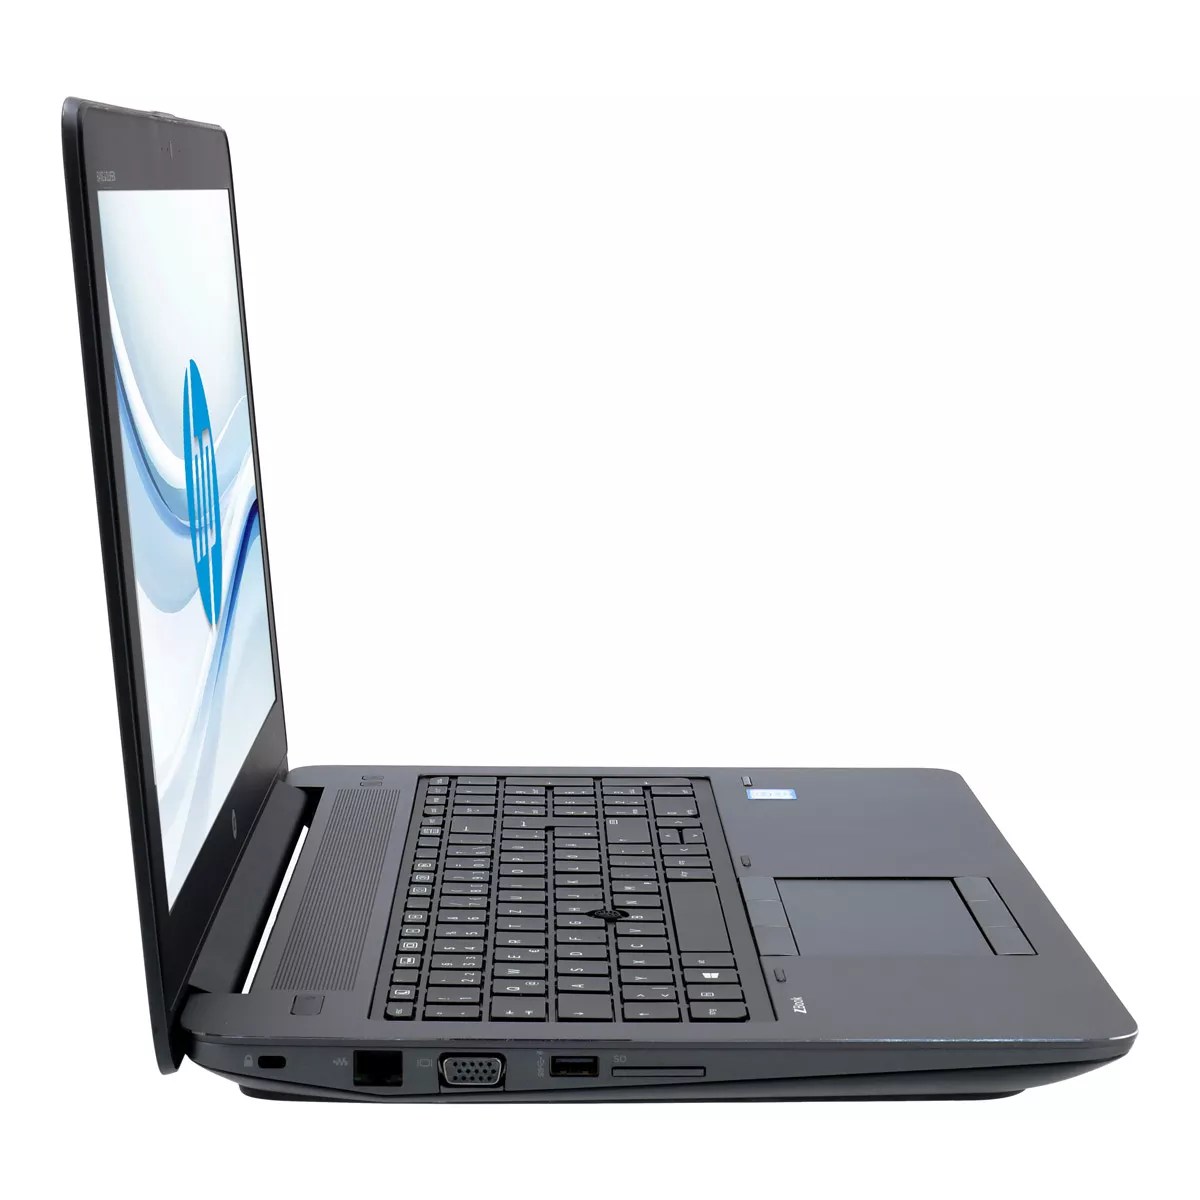 HP ZBook 15 G4 Core i7 7700HQ nVidia Quadro M1200M 16 GB 240 GB M.2 SSD Webcam A